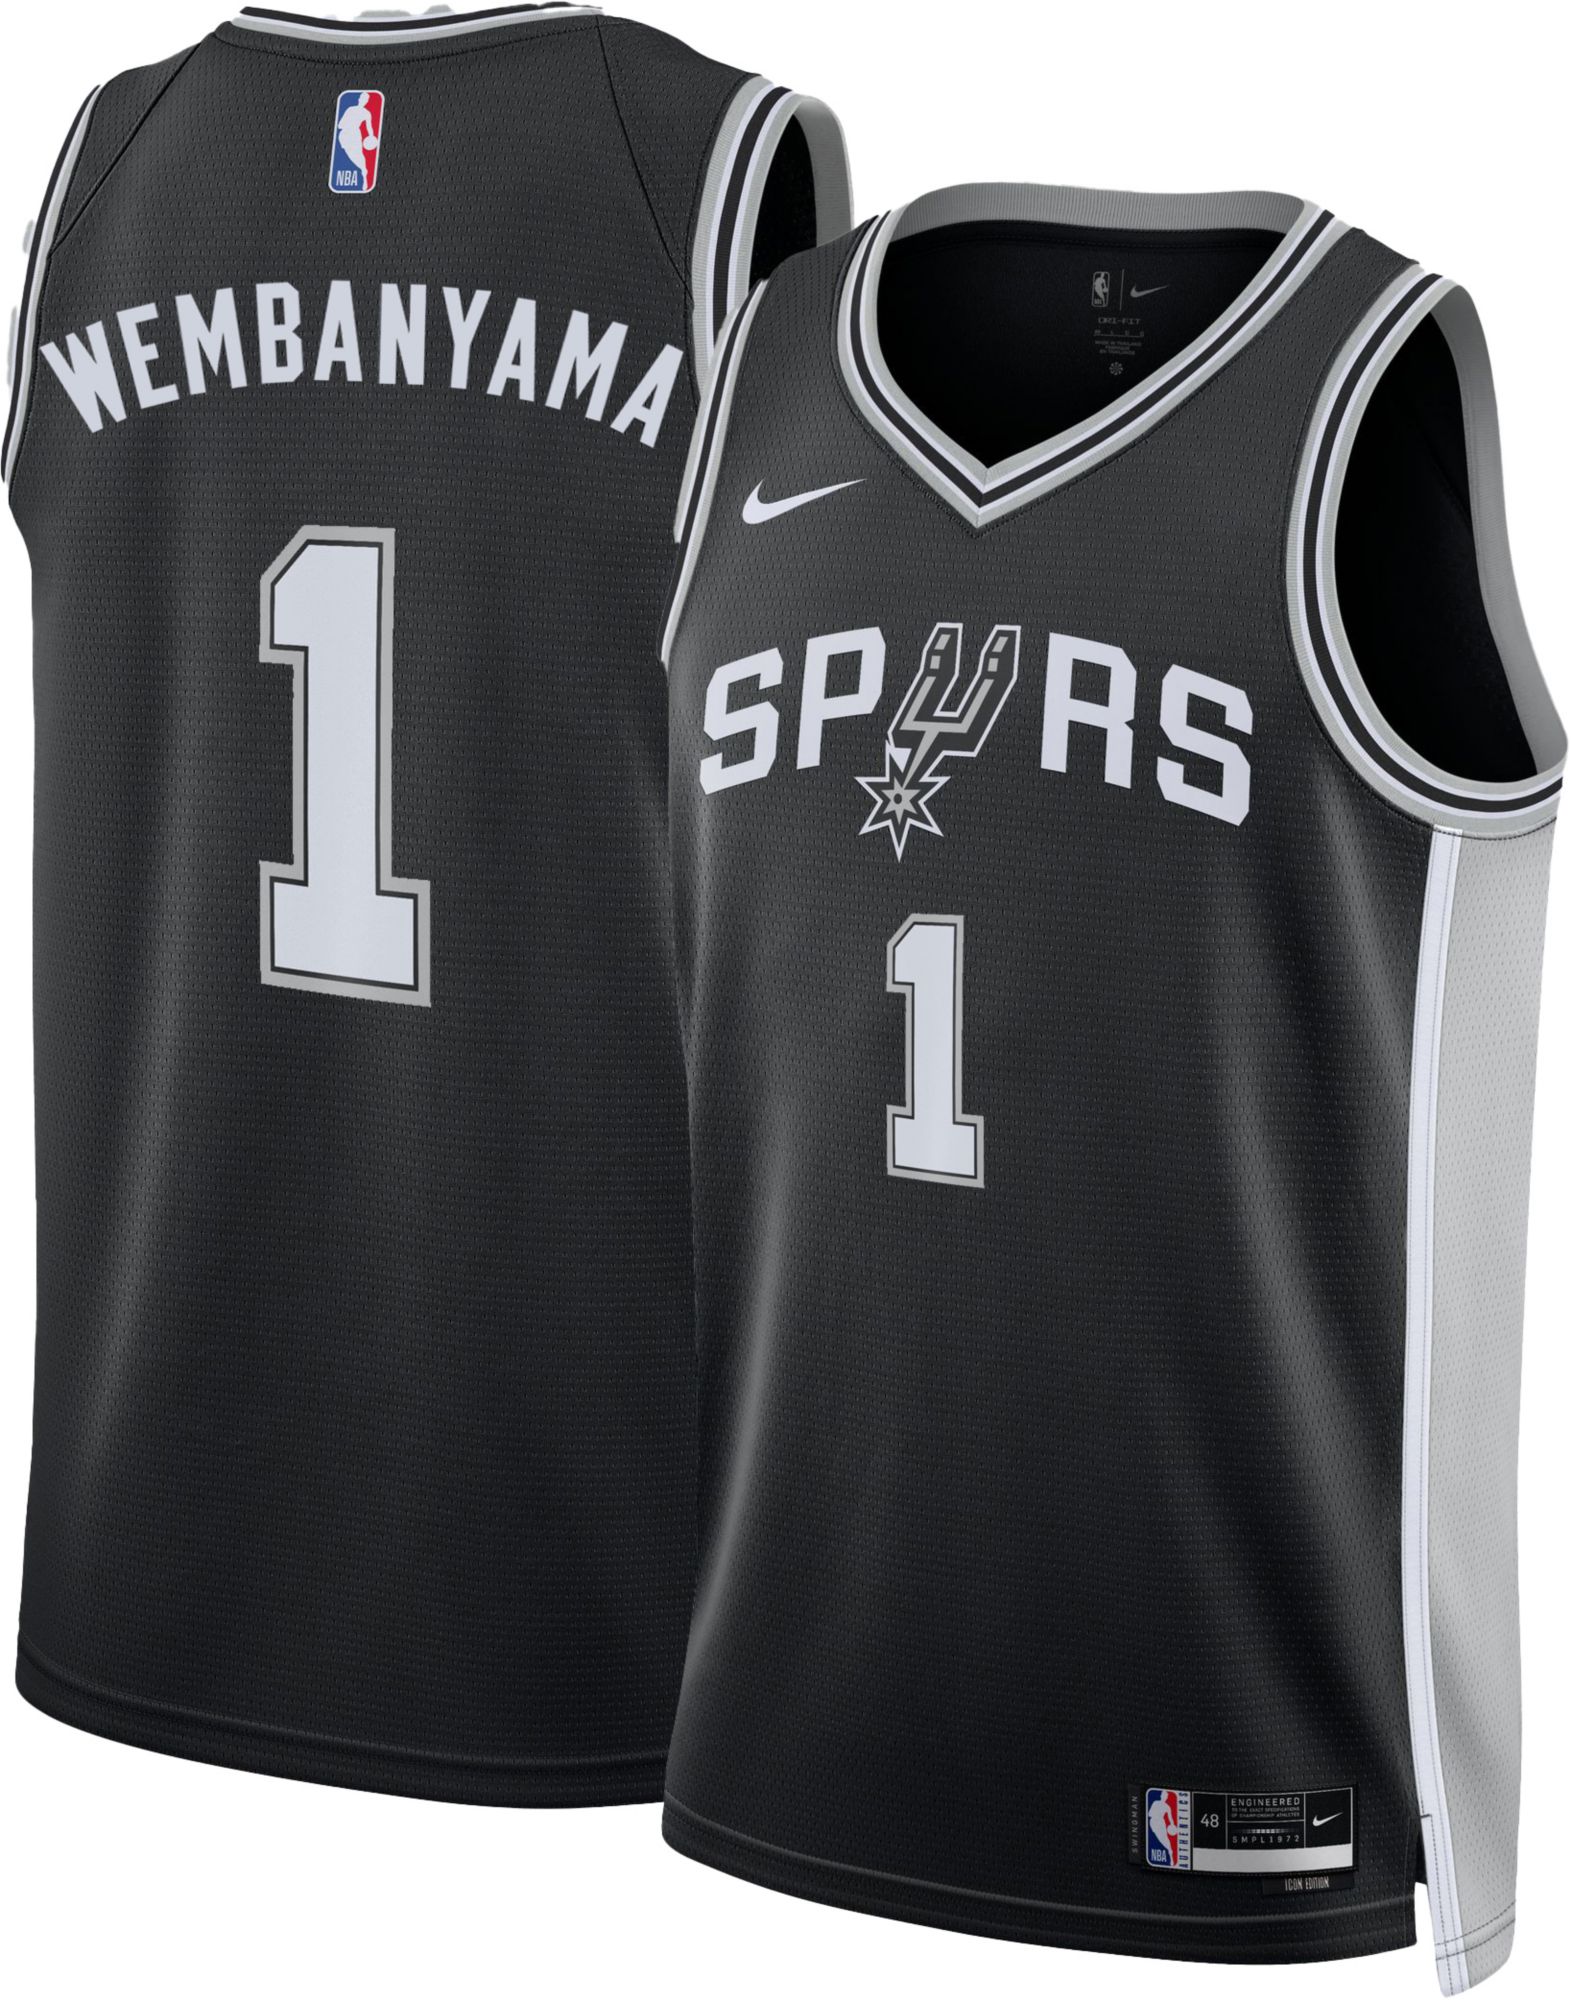 Nike Youth Jeremy Sochan San Antonio Spurs 2022 City Edition Swingman Jersey, Teal, Size: XL, Polyester